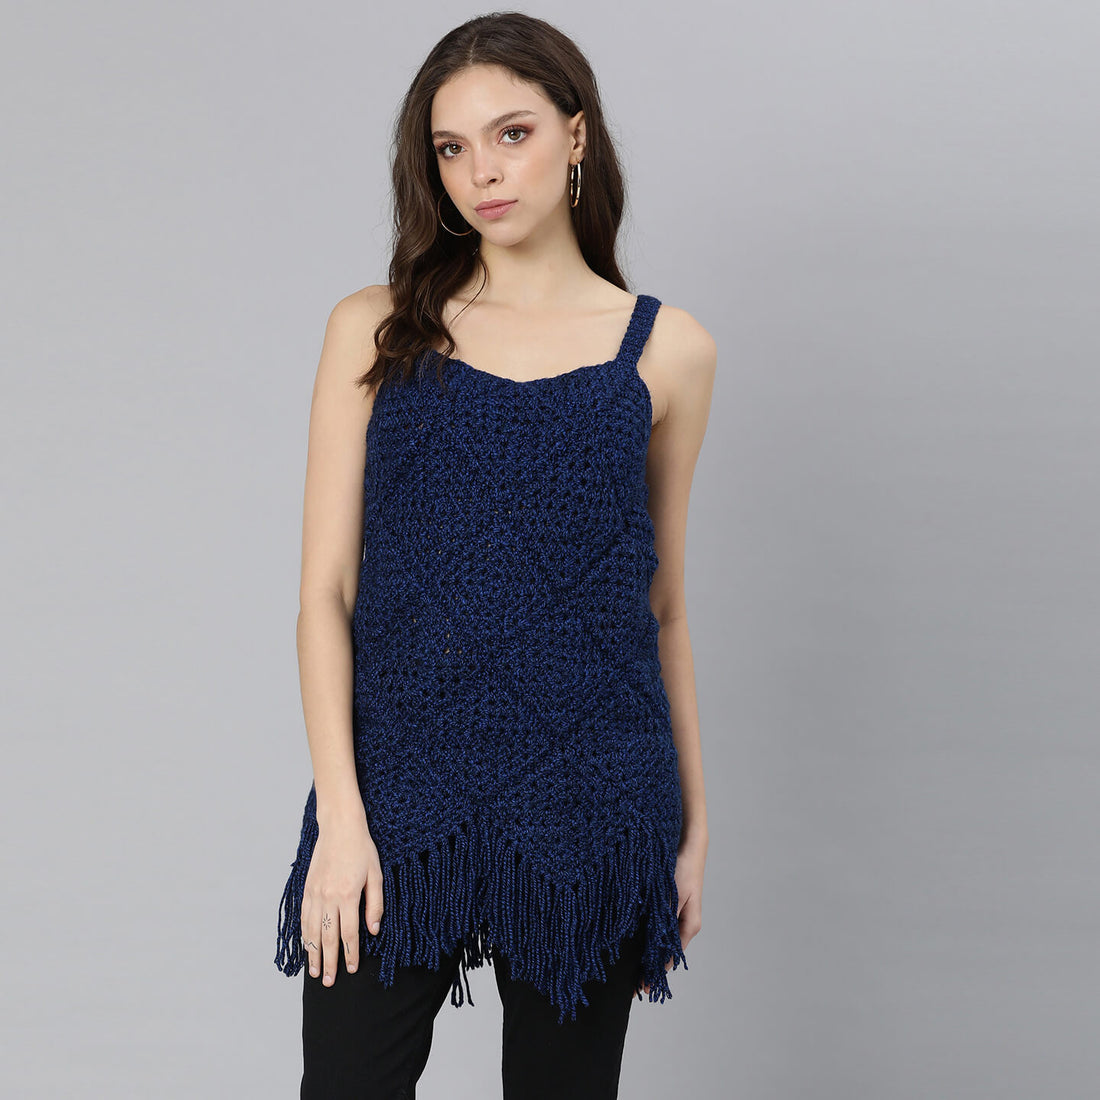 Handmade Mini Dress - Blue & Black 3025